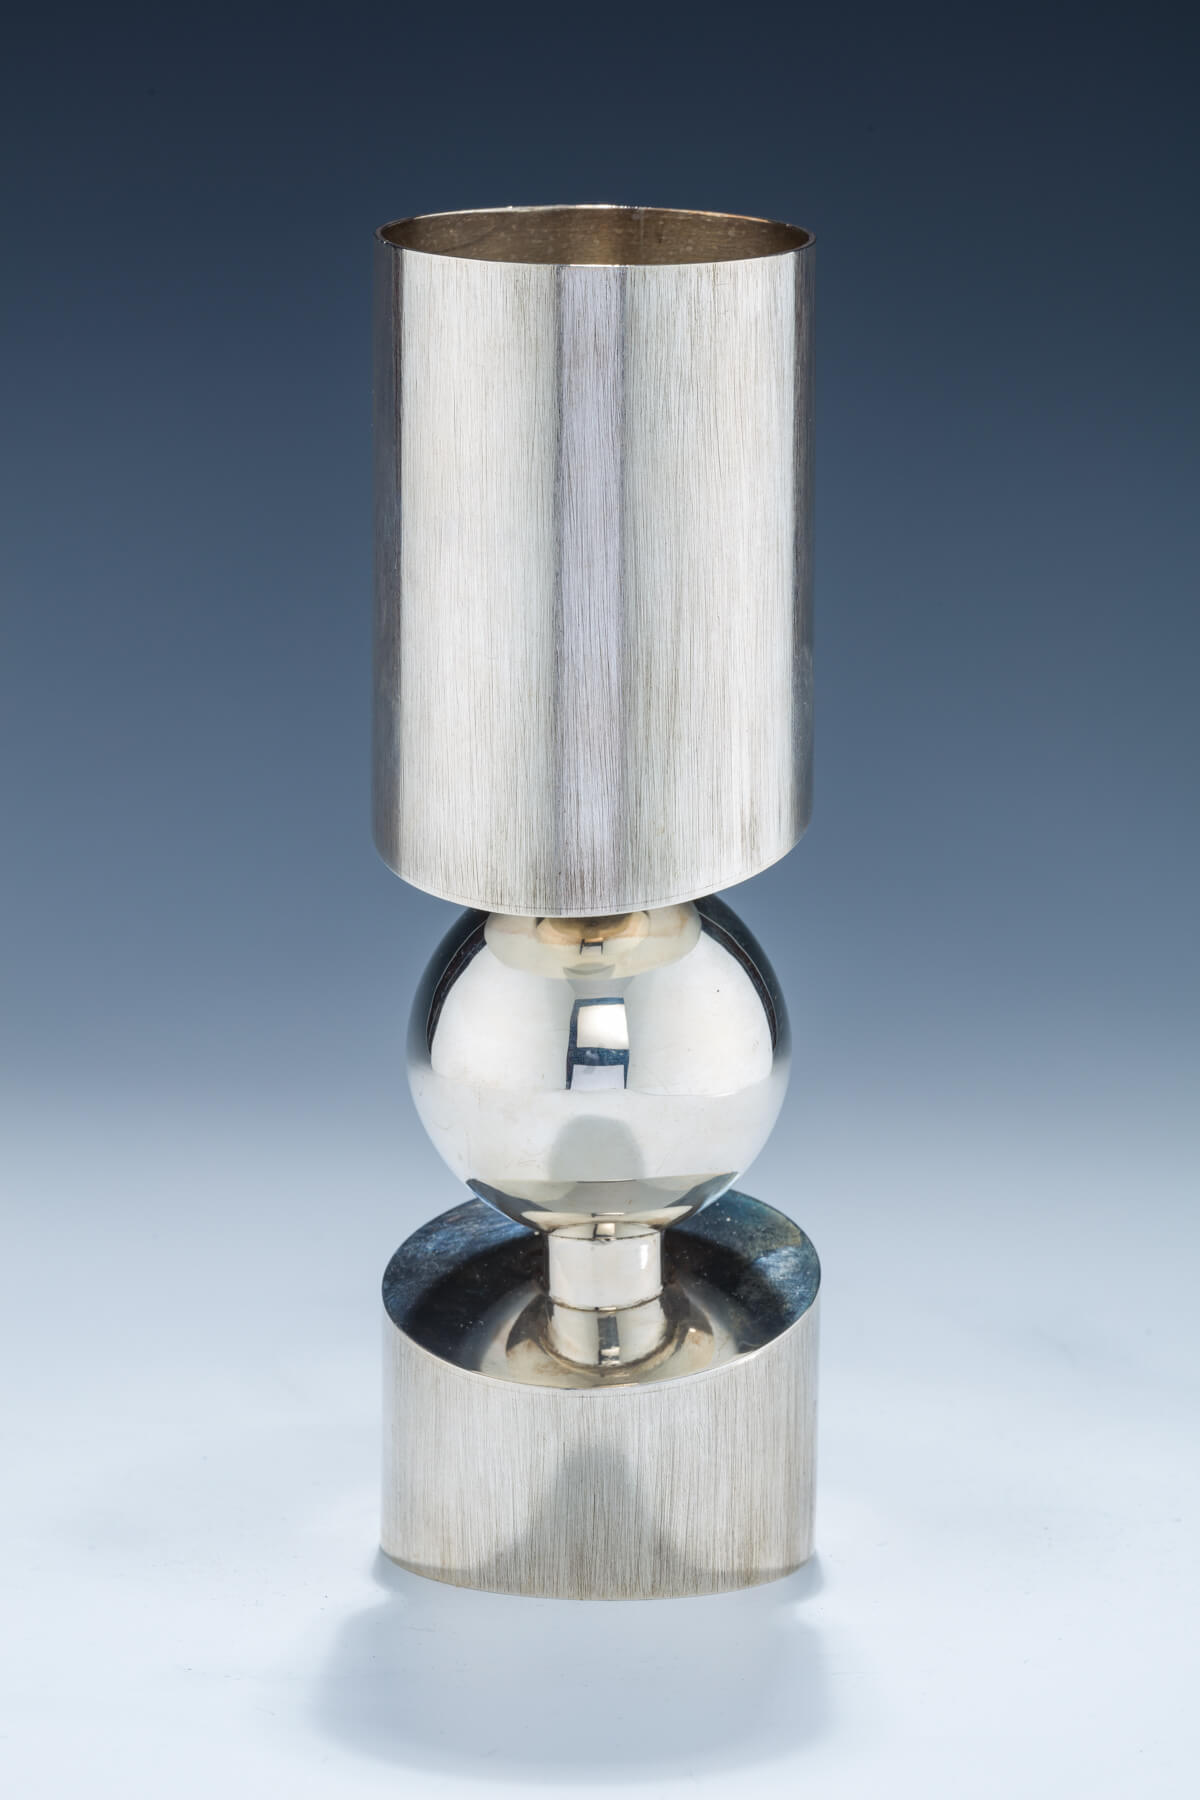 146. A Large Sterling Silver Kiddush Goblet by Carmel Shabi